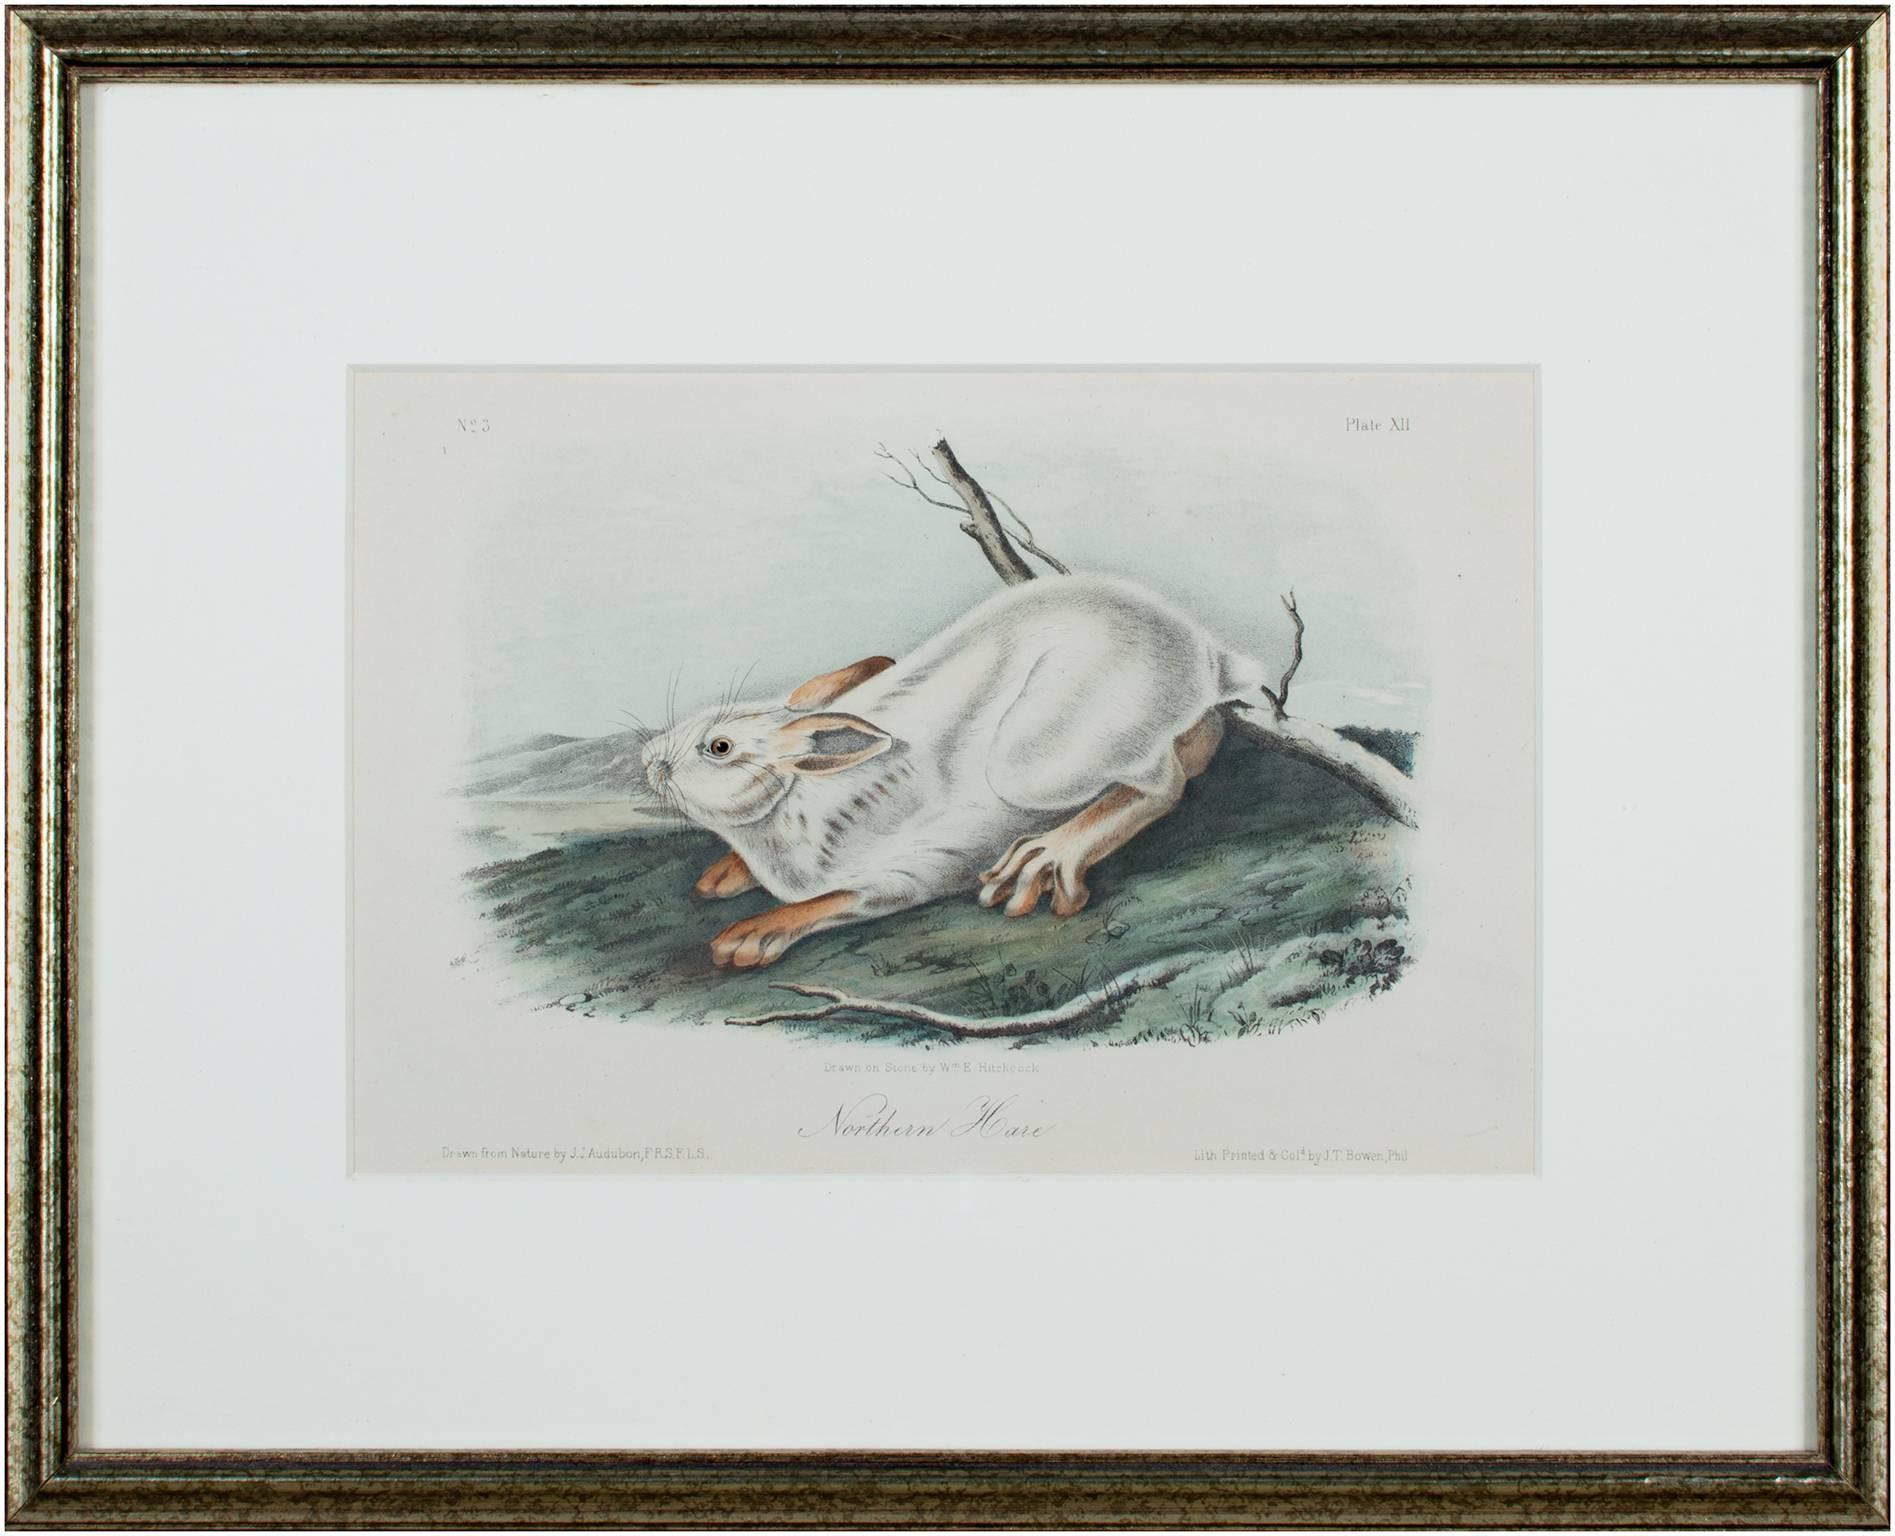 19th century color lithograph hare animal print wildlife - Gray Animal Print by John James Audubon